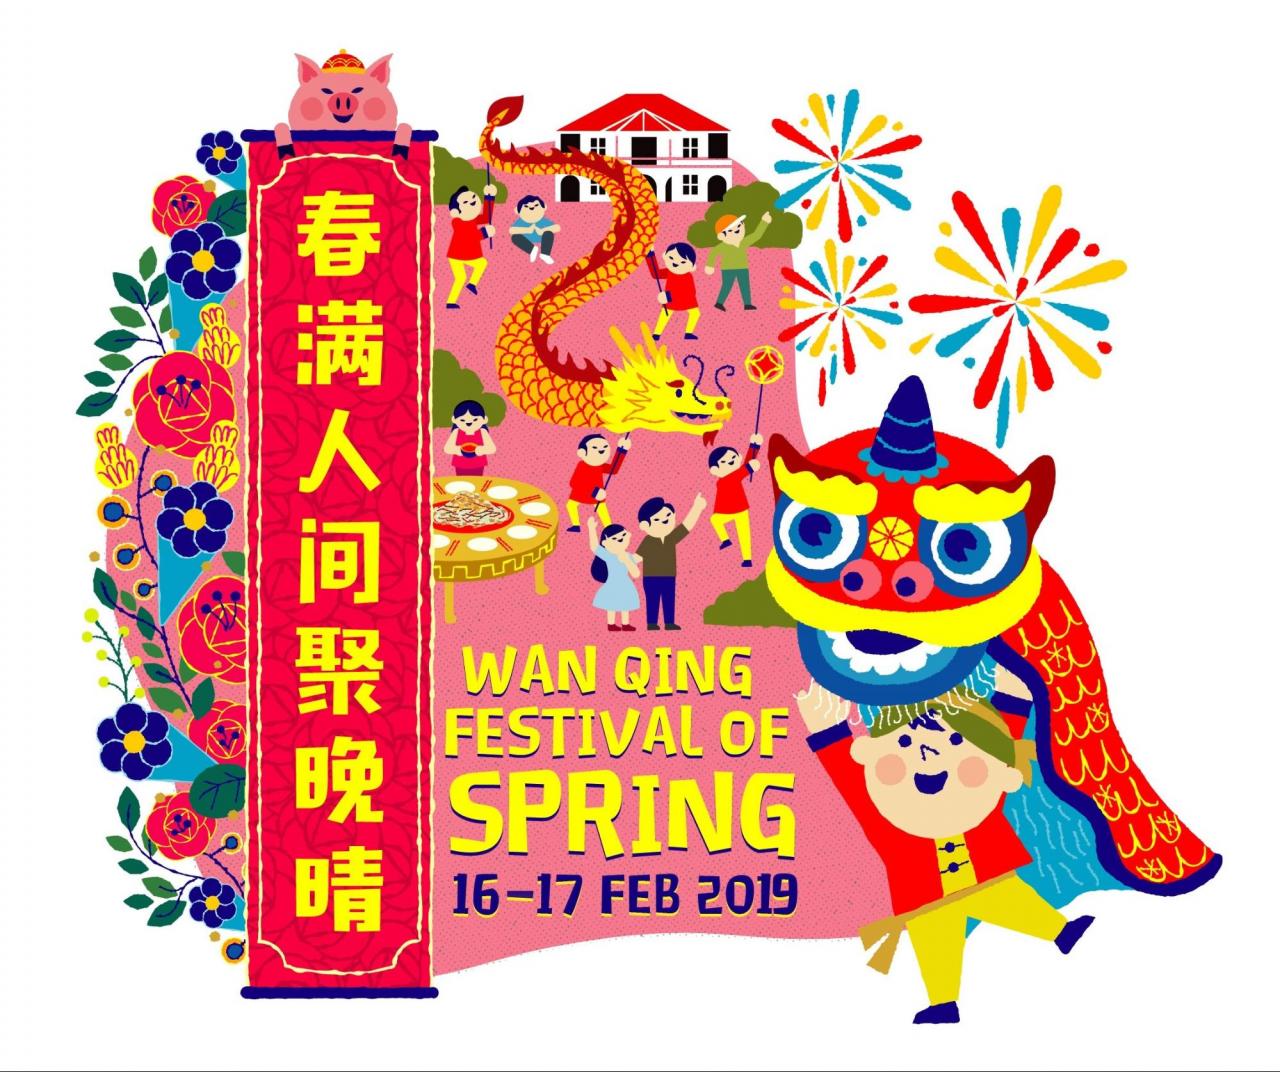 Wan Qing Festival of Spring - CNY